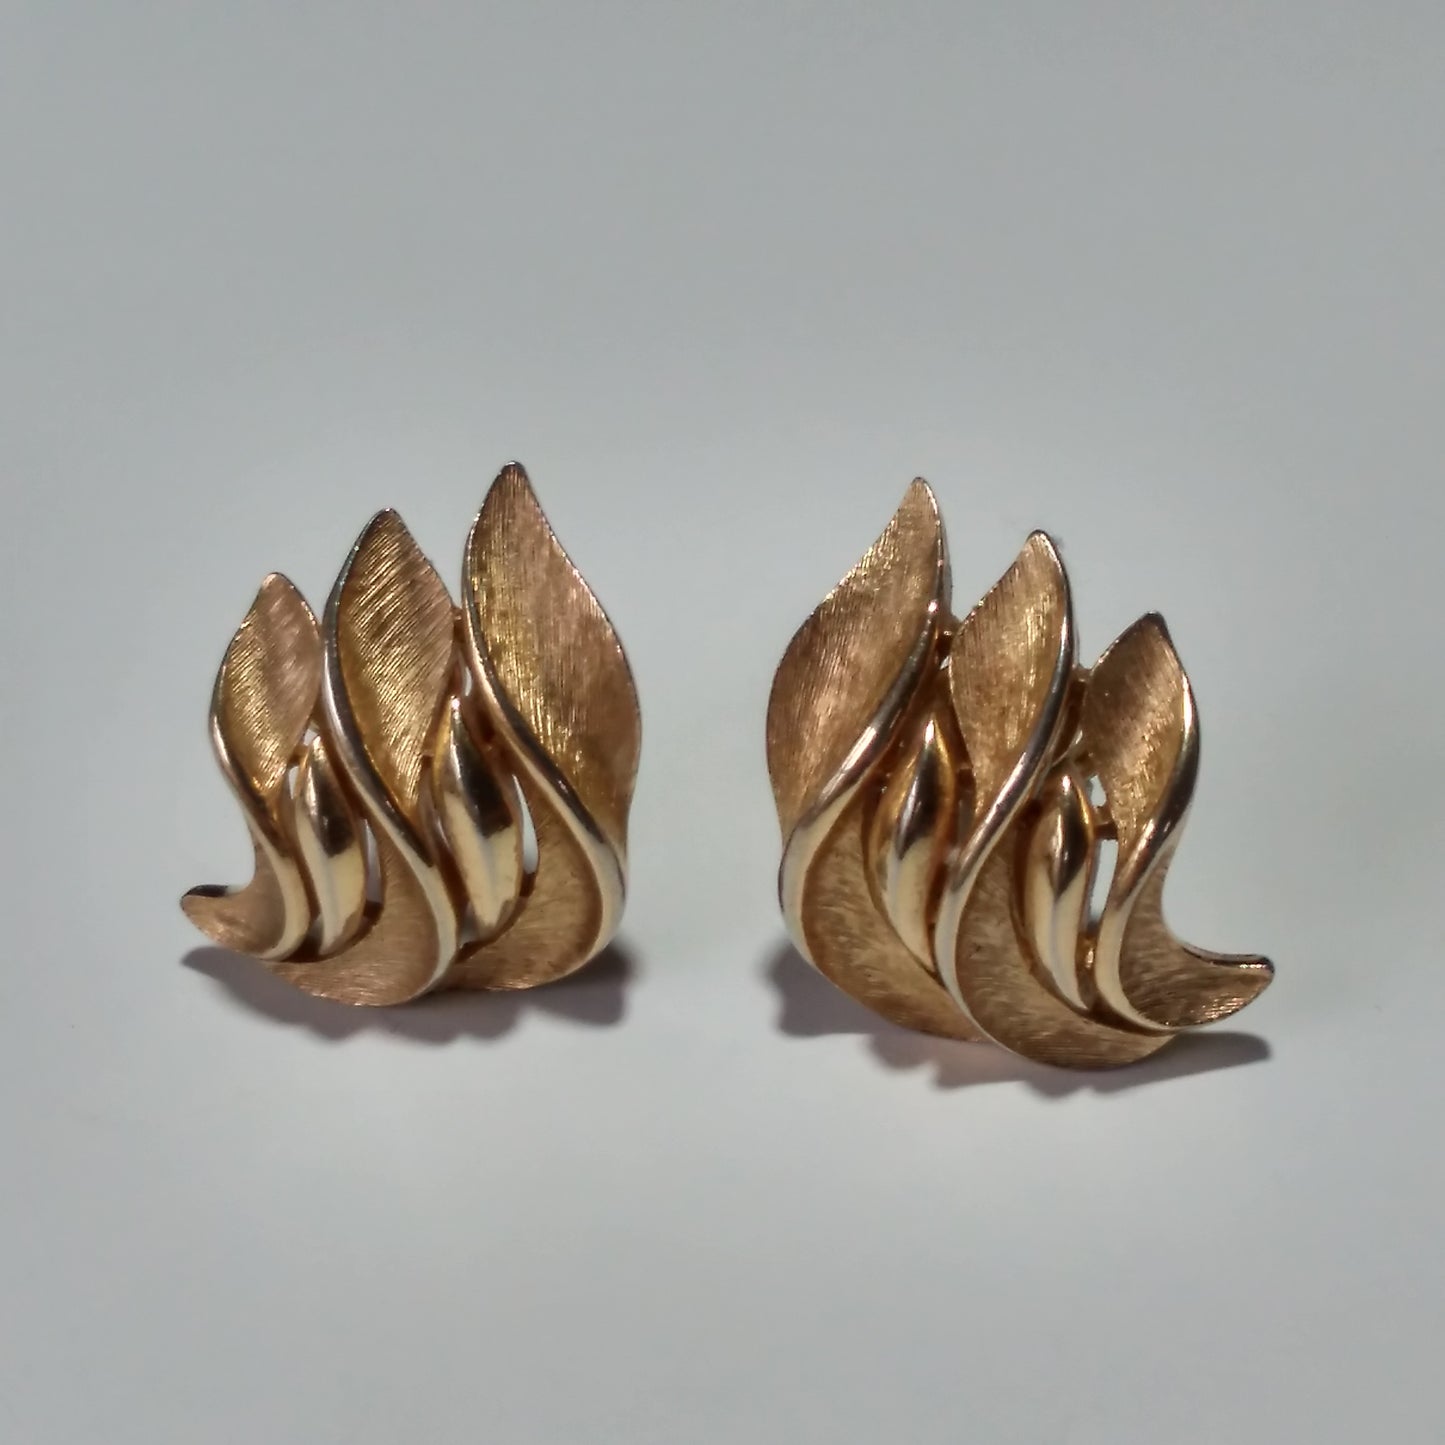 1960s Leaf Earrings